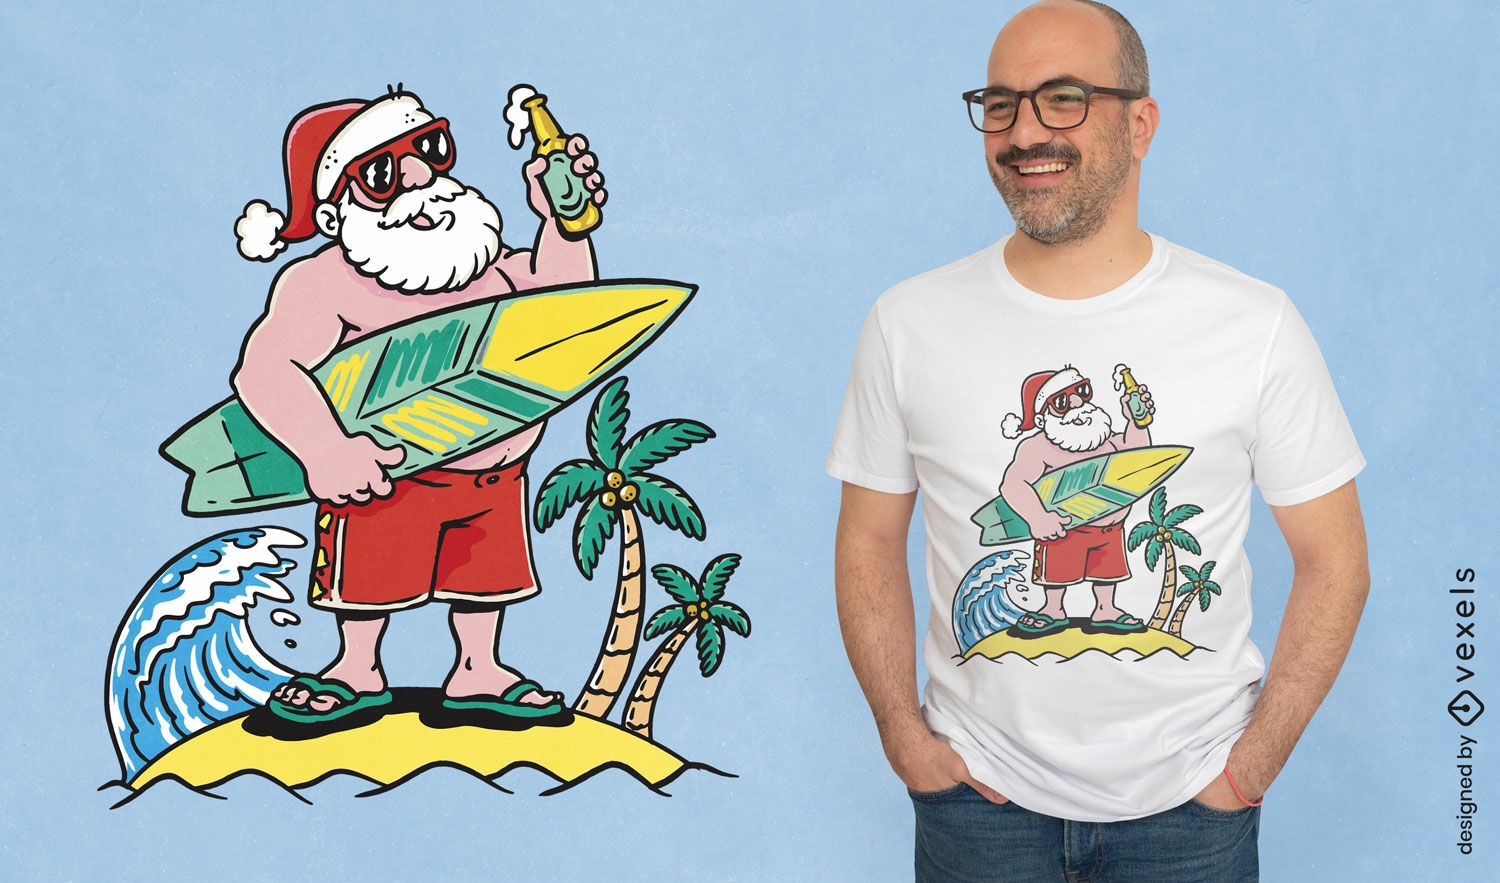 Santa Claus with a surfboard t-shirt design